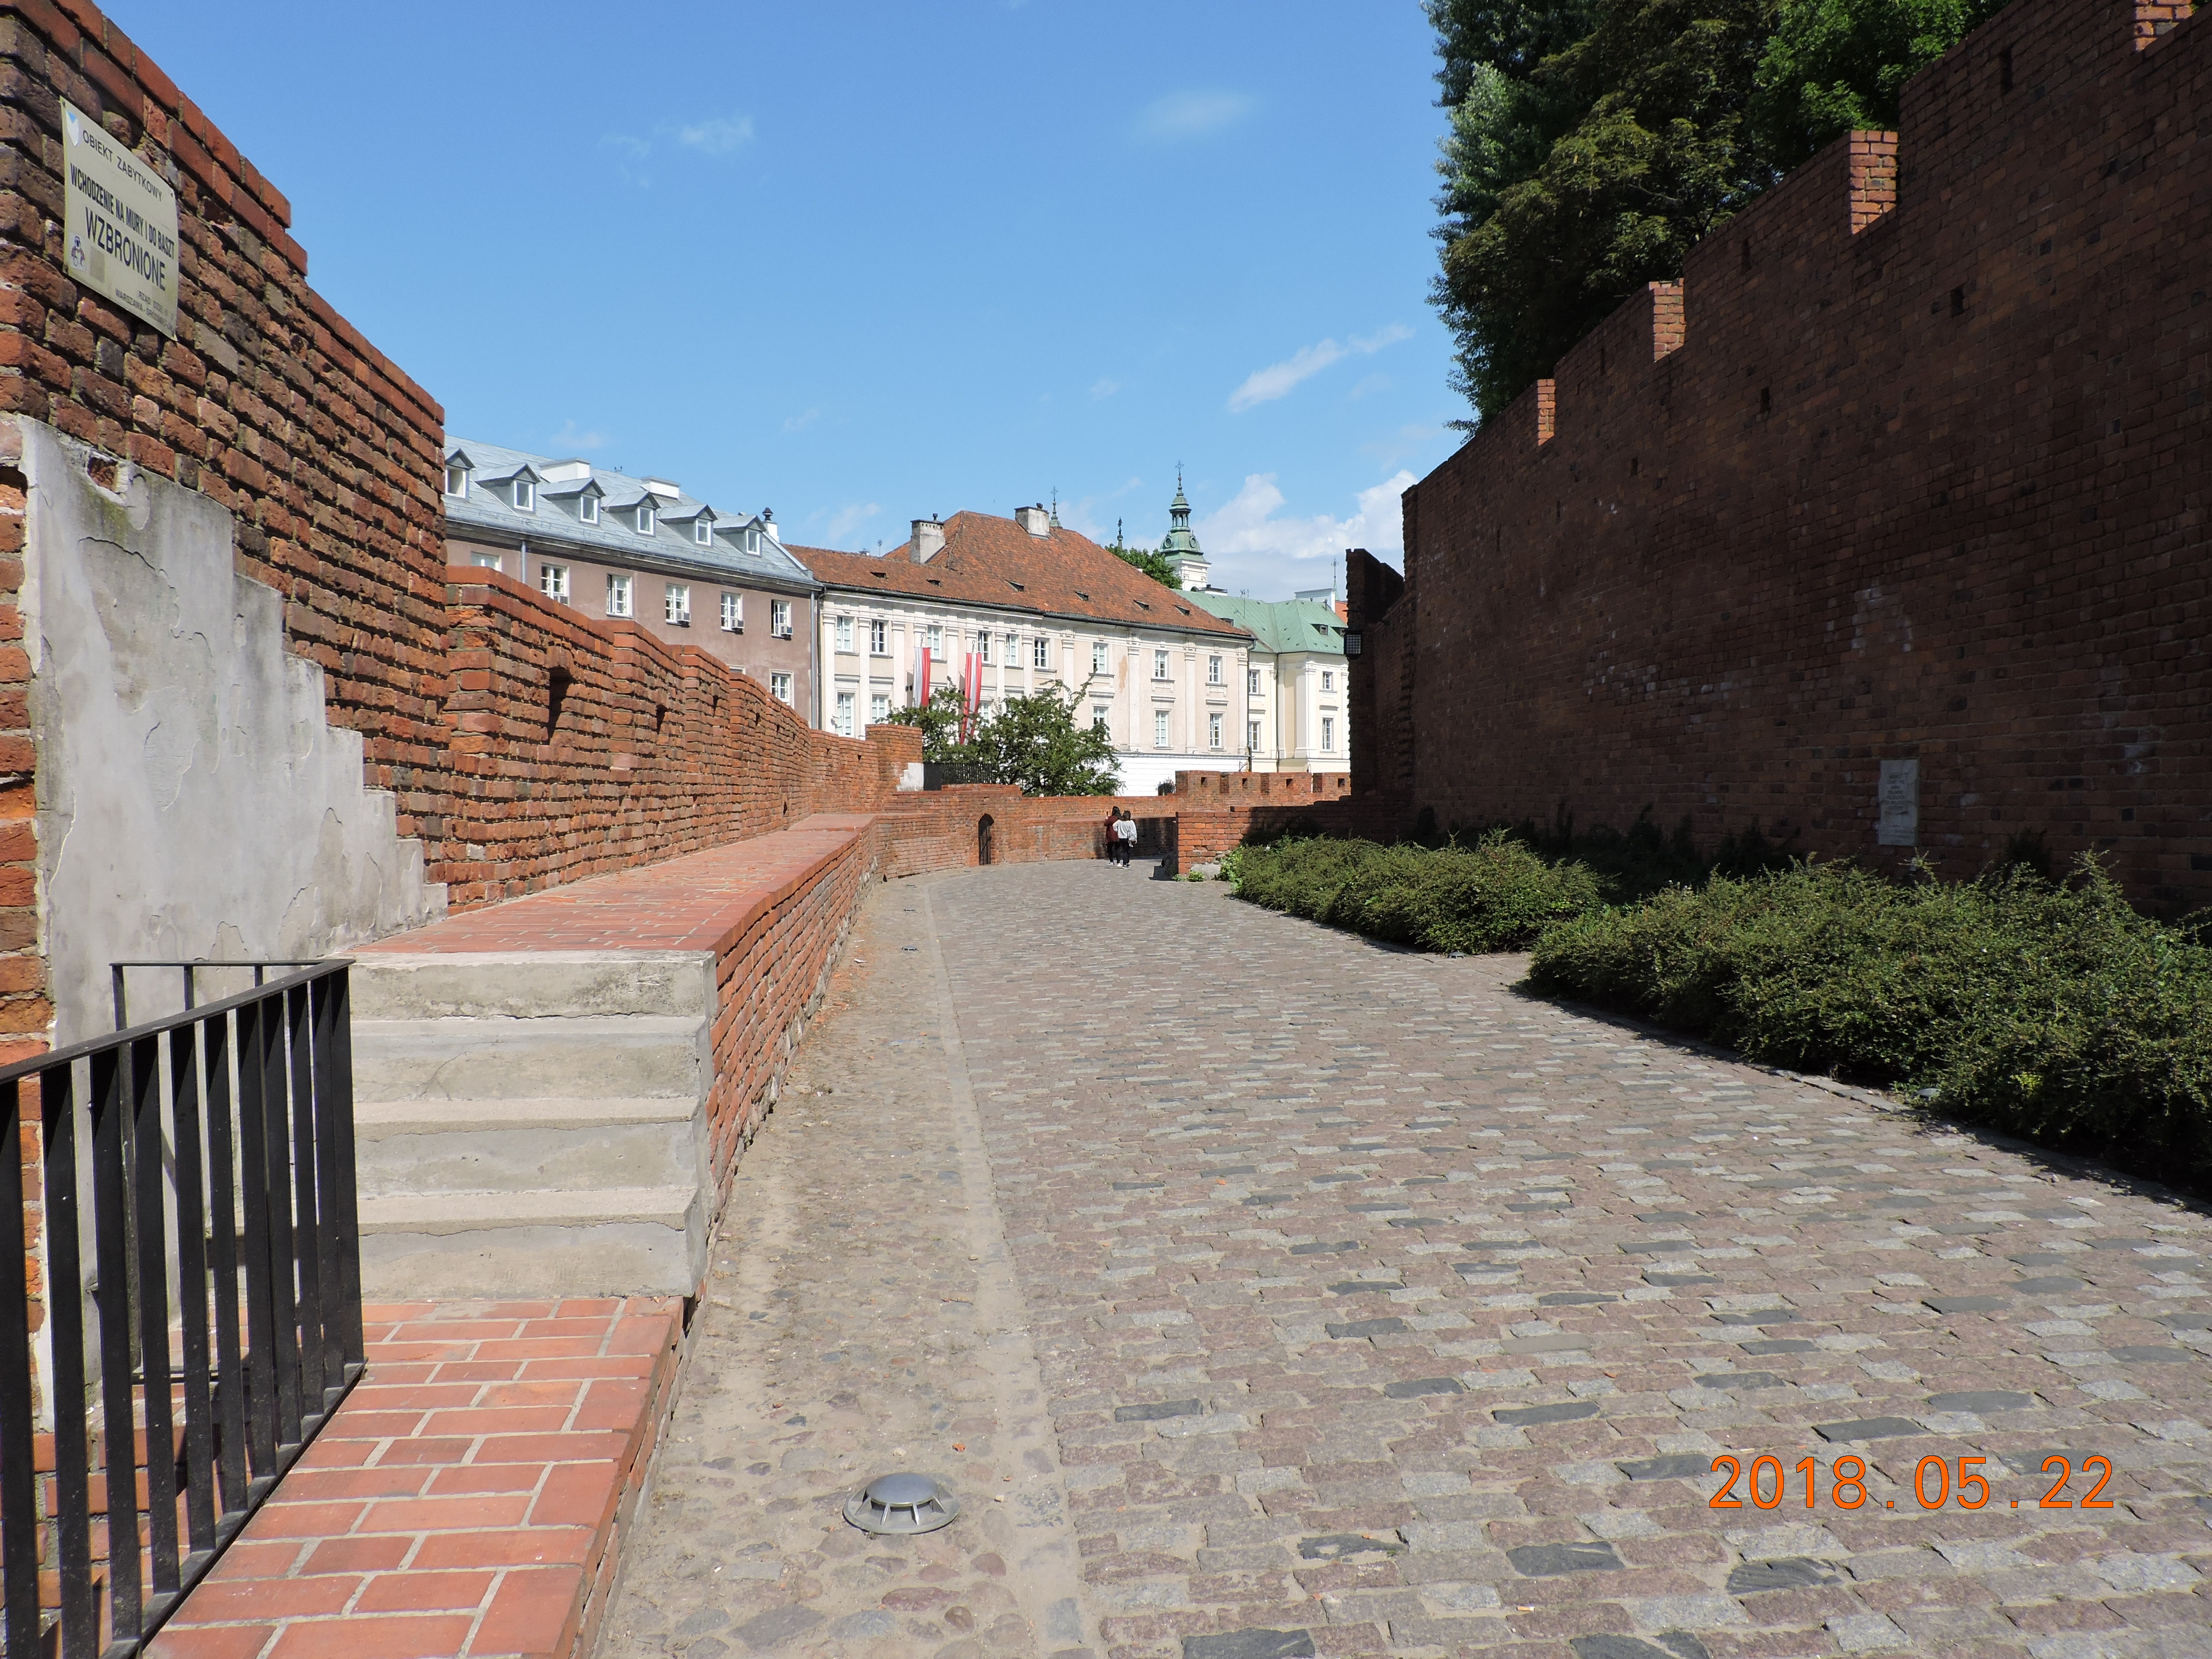 Warsaw Wall